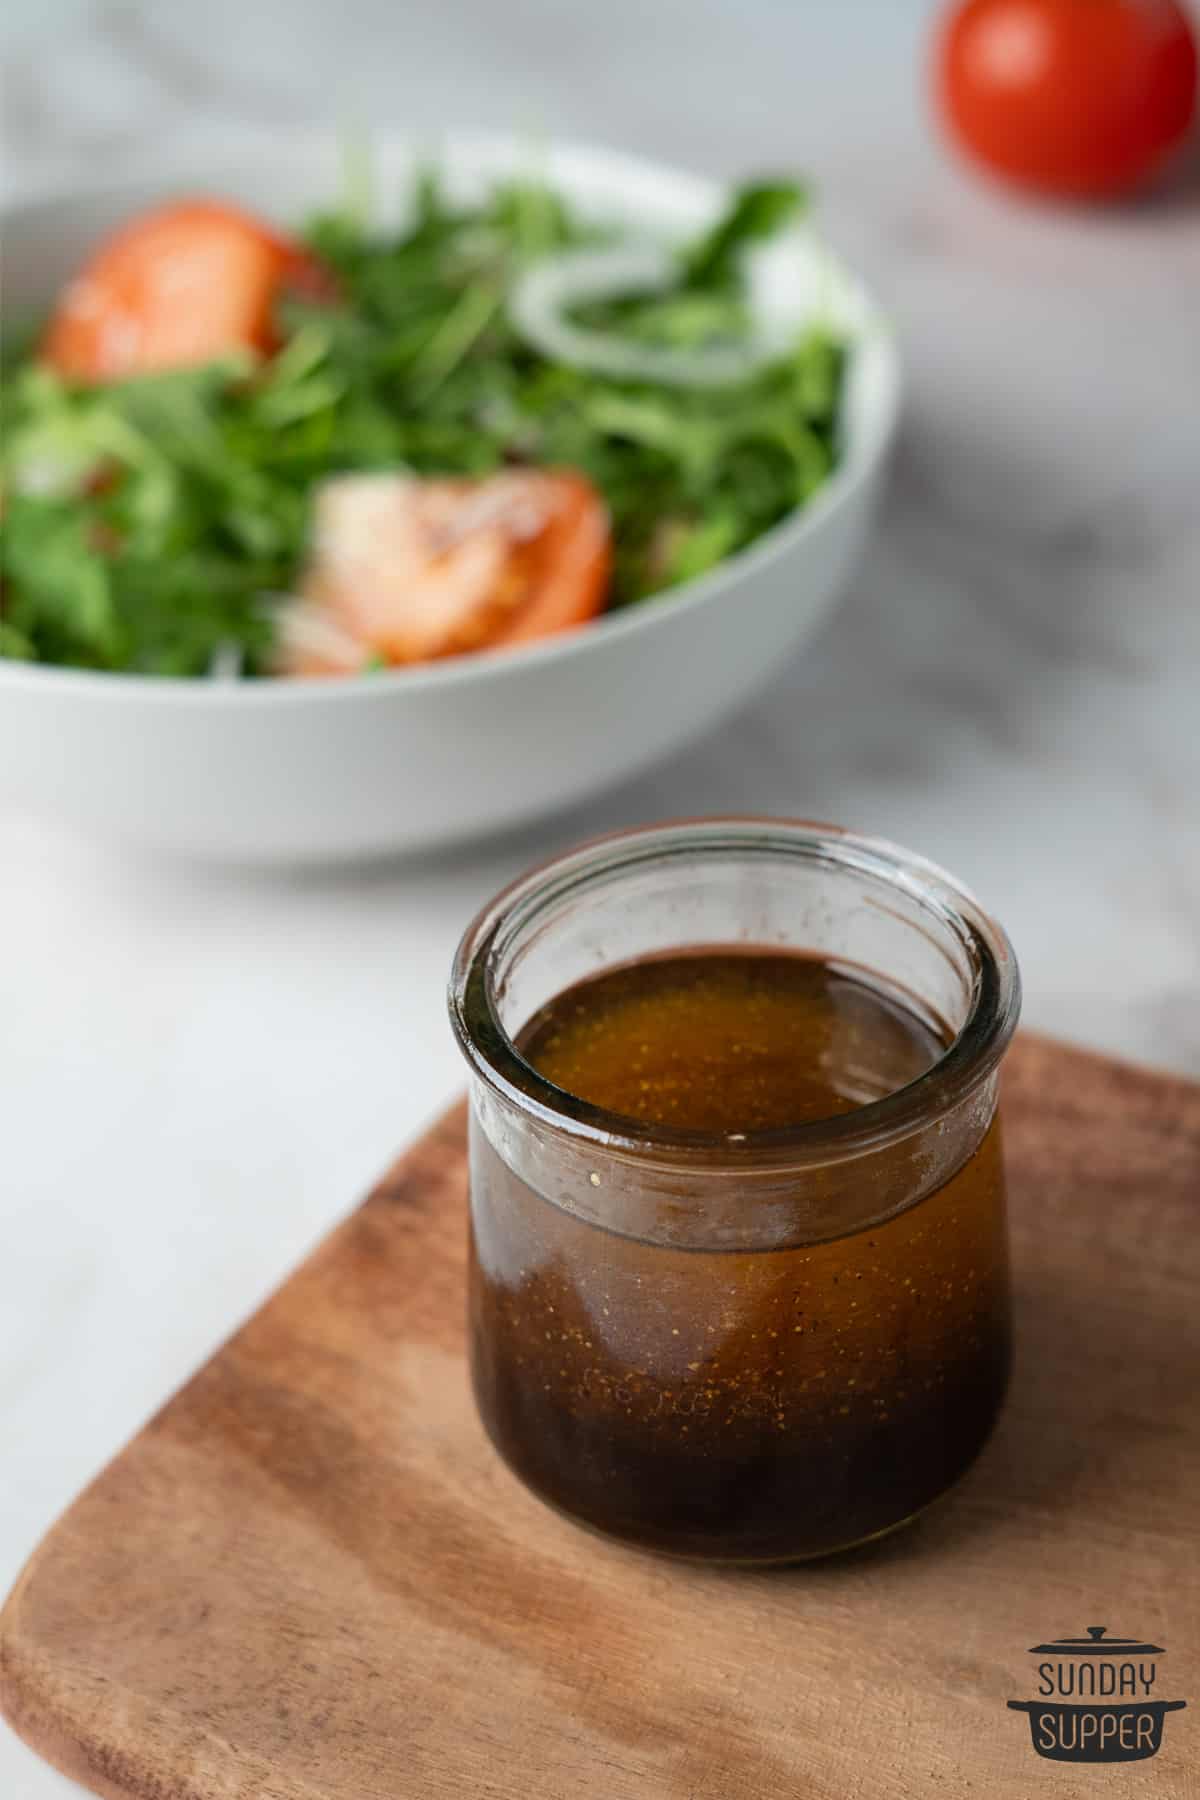 balsamic vinaigrette in an open jar next to a bowl of salad